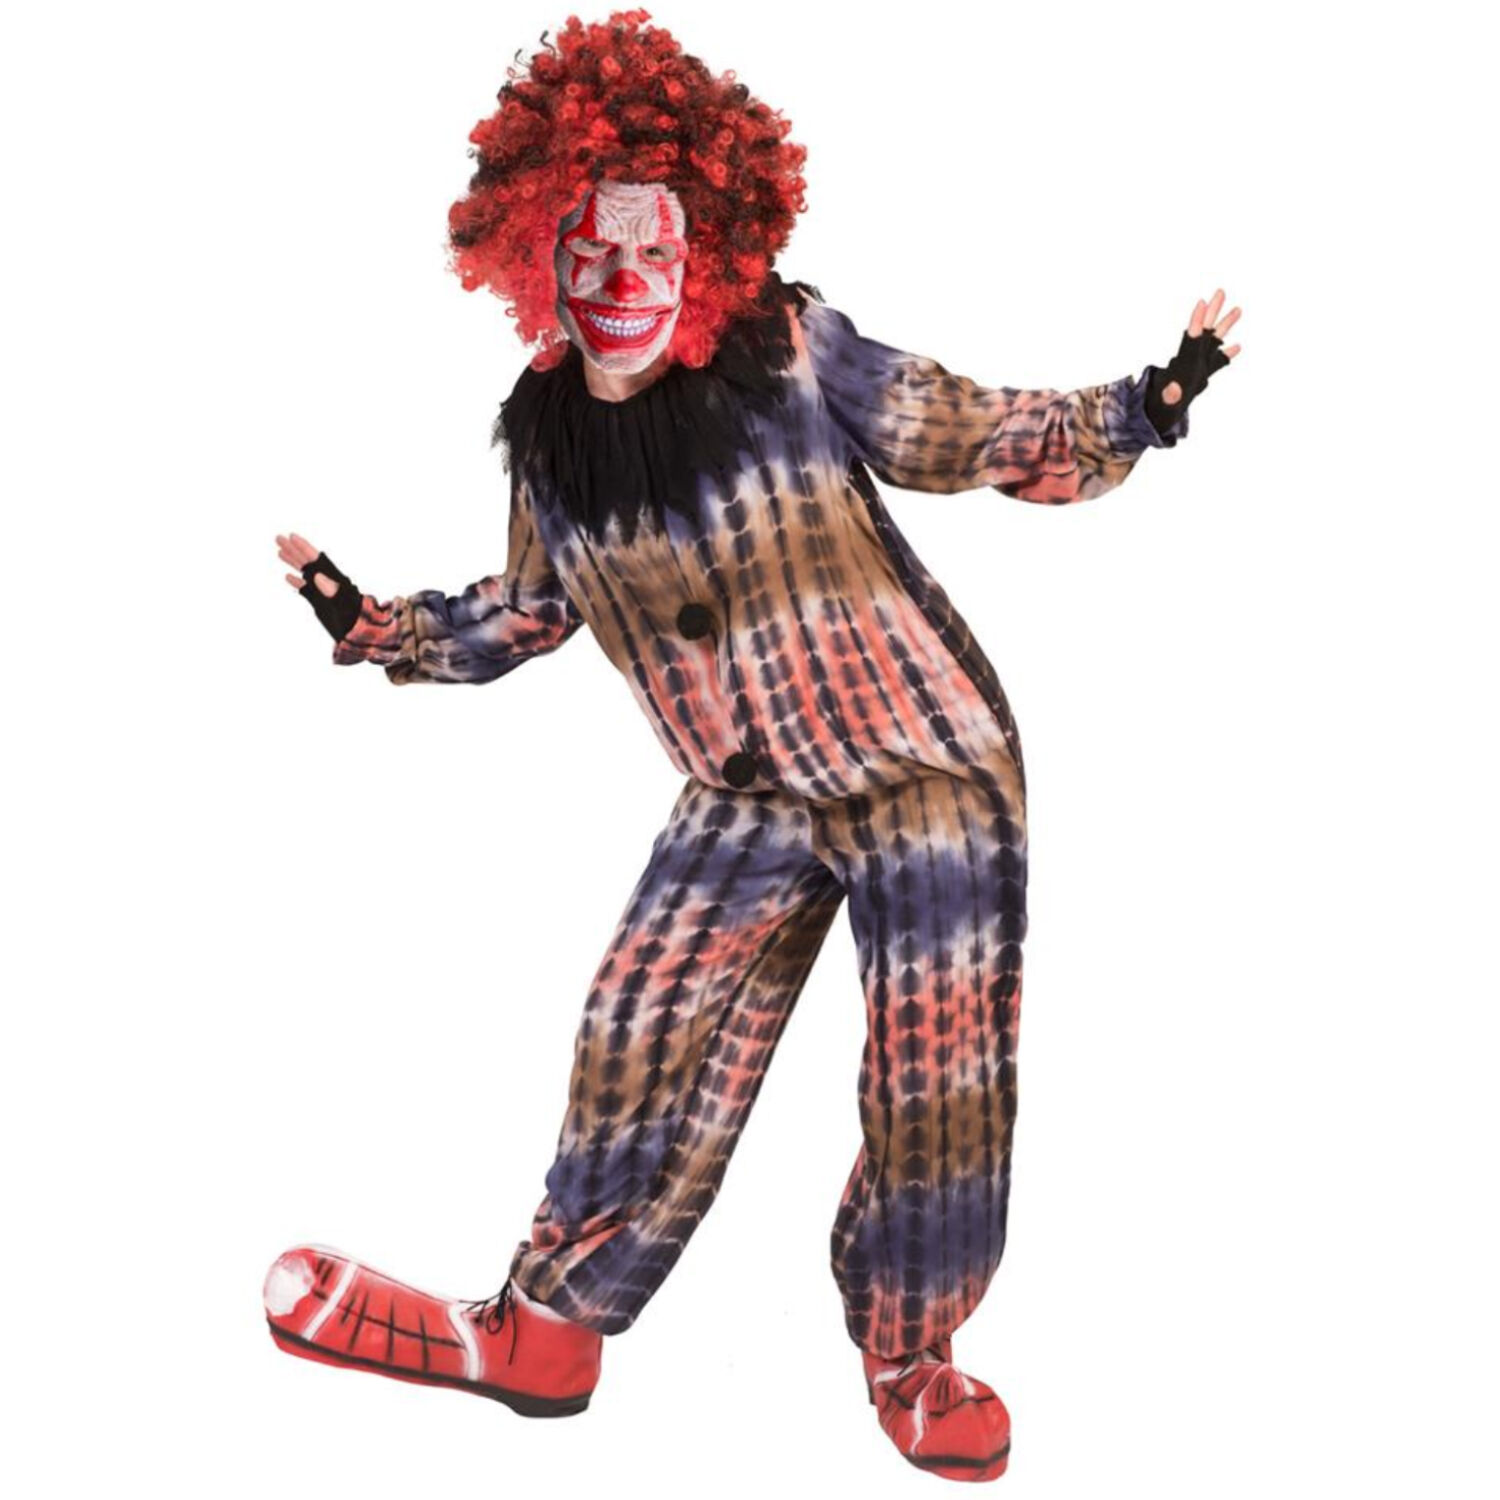 NEU Kinder-Kostm Horror-Clown Pepe, Jumpsuit mit Kragen, Gr. 104-116